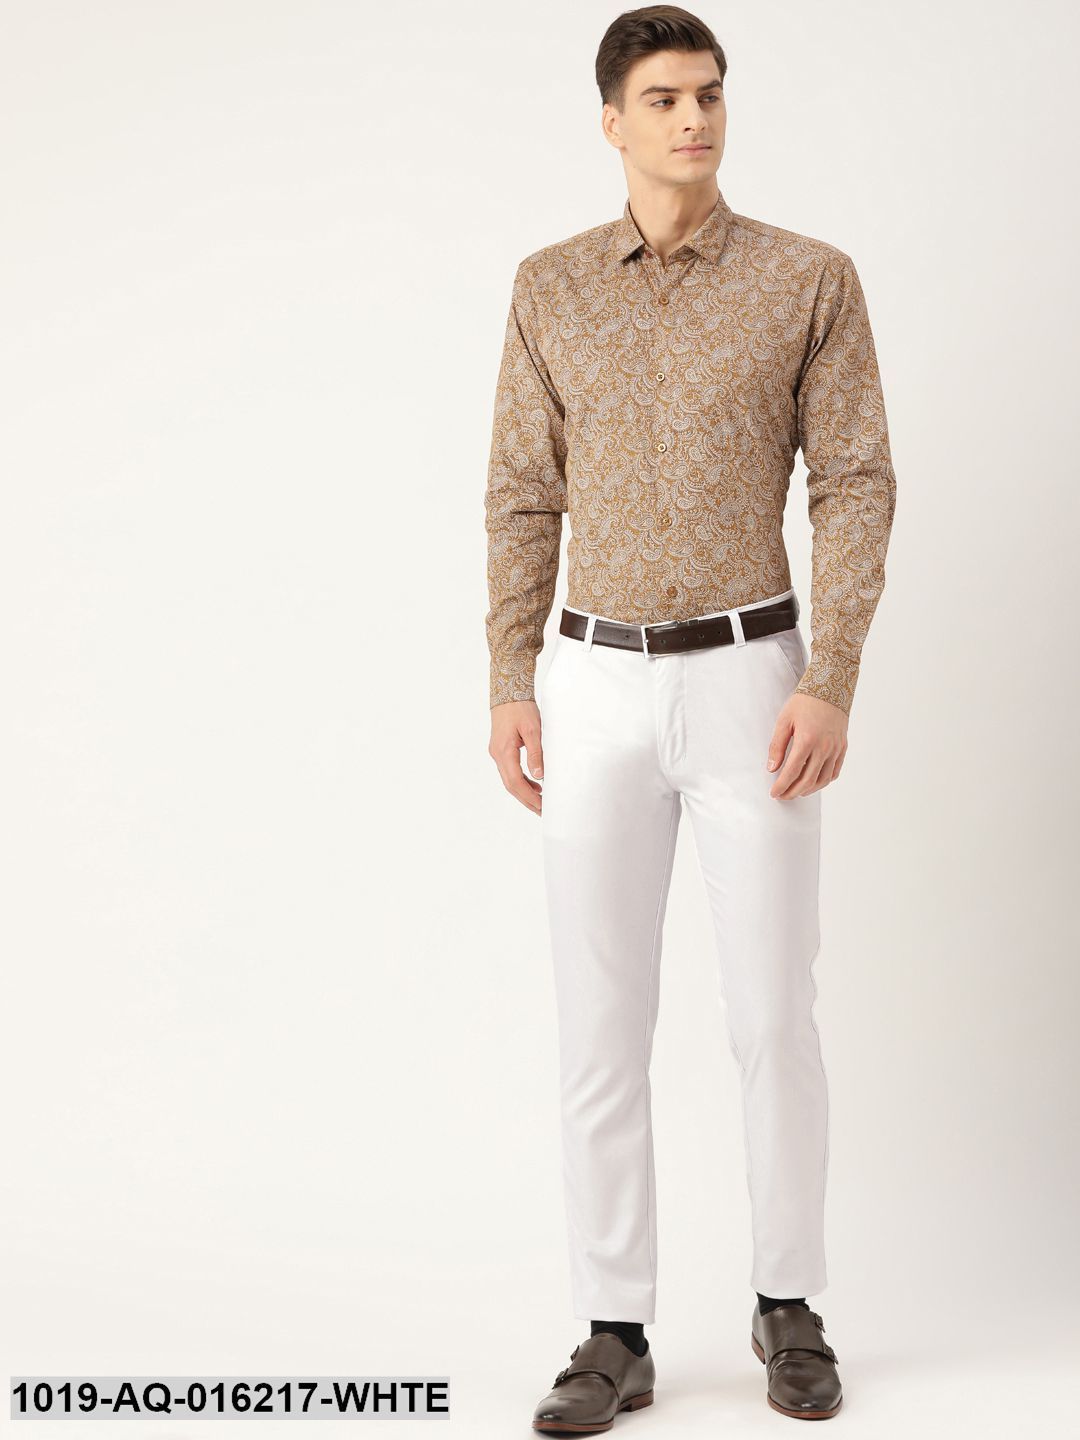 Men's Cotton Blend White Solid Formal Trousers - Sojanya